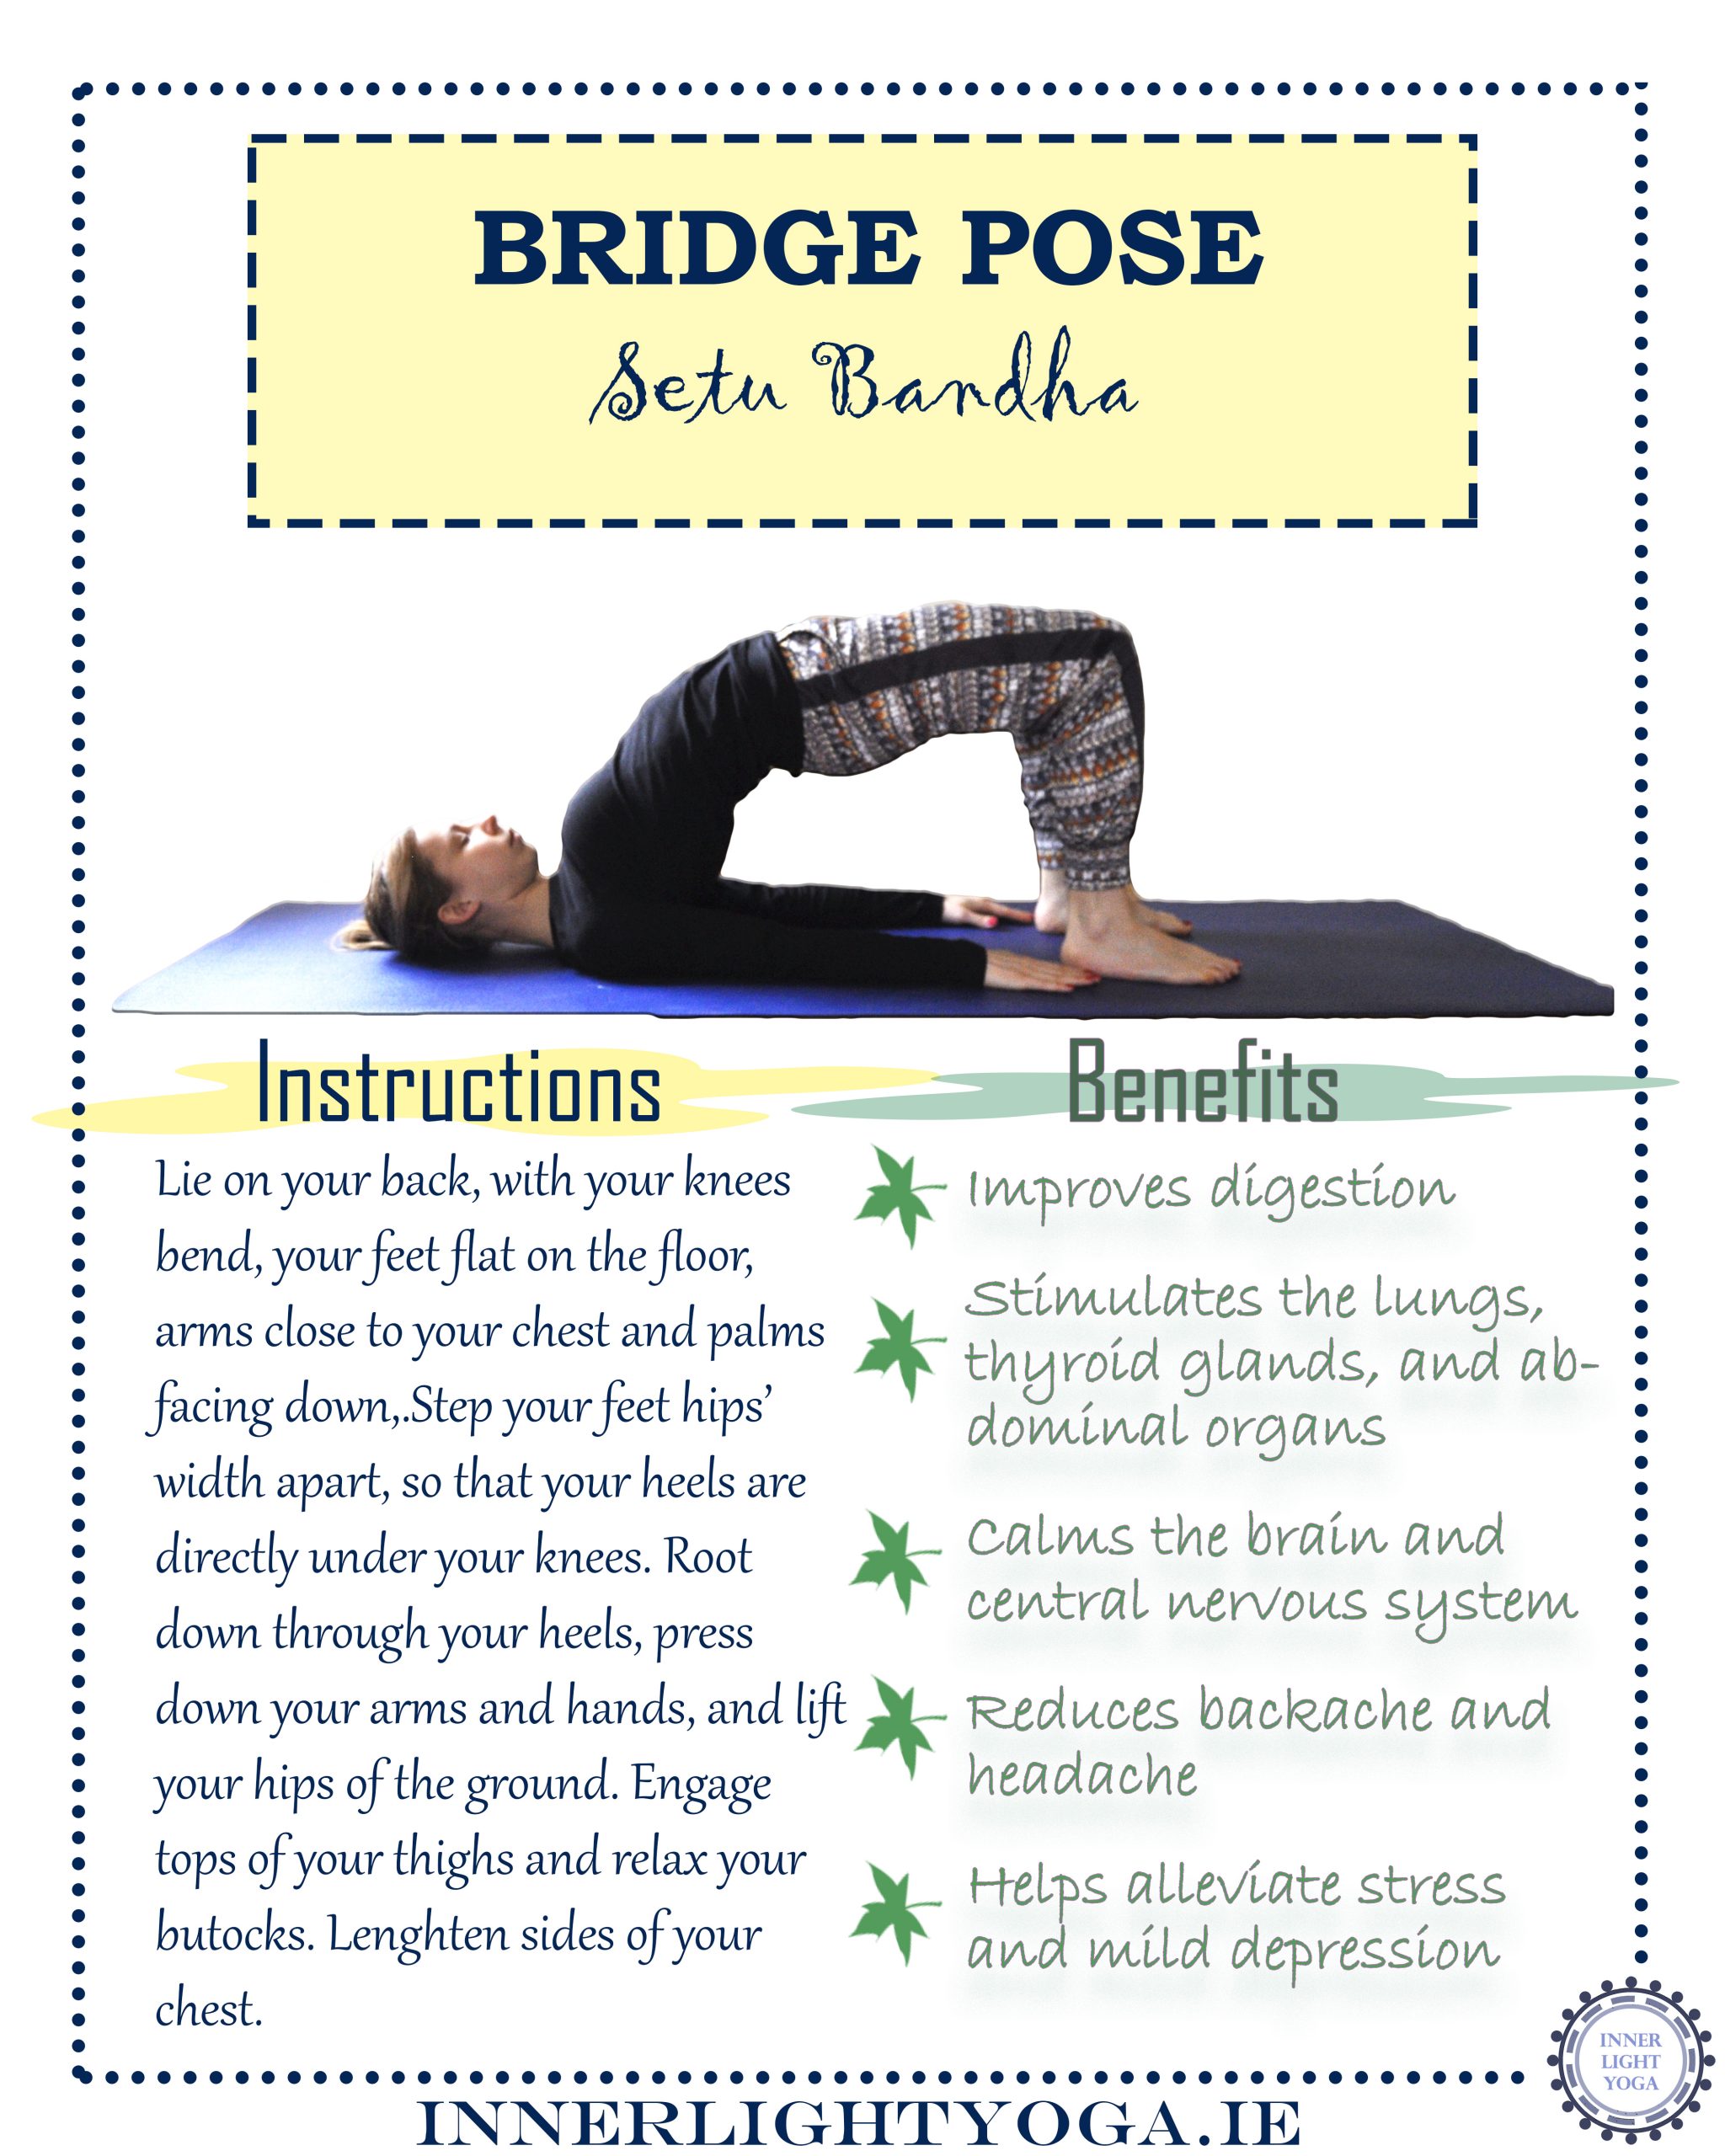 Bridge Pose Yoga 🤸 Benefits of... - GetFit Fitness Club | Facebook